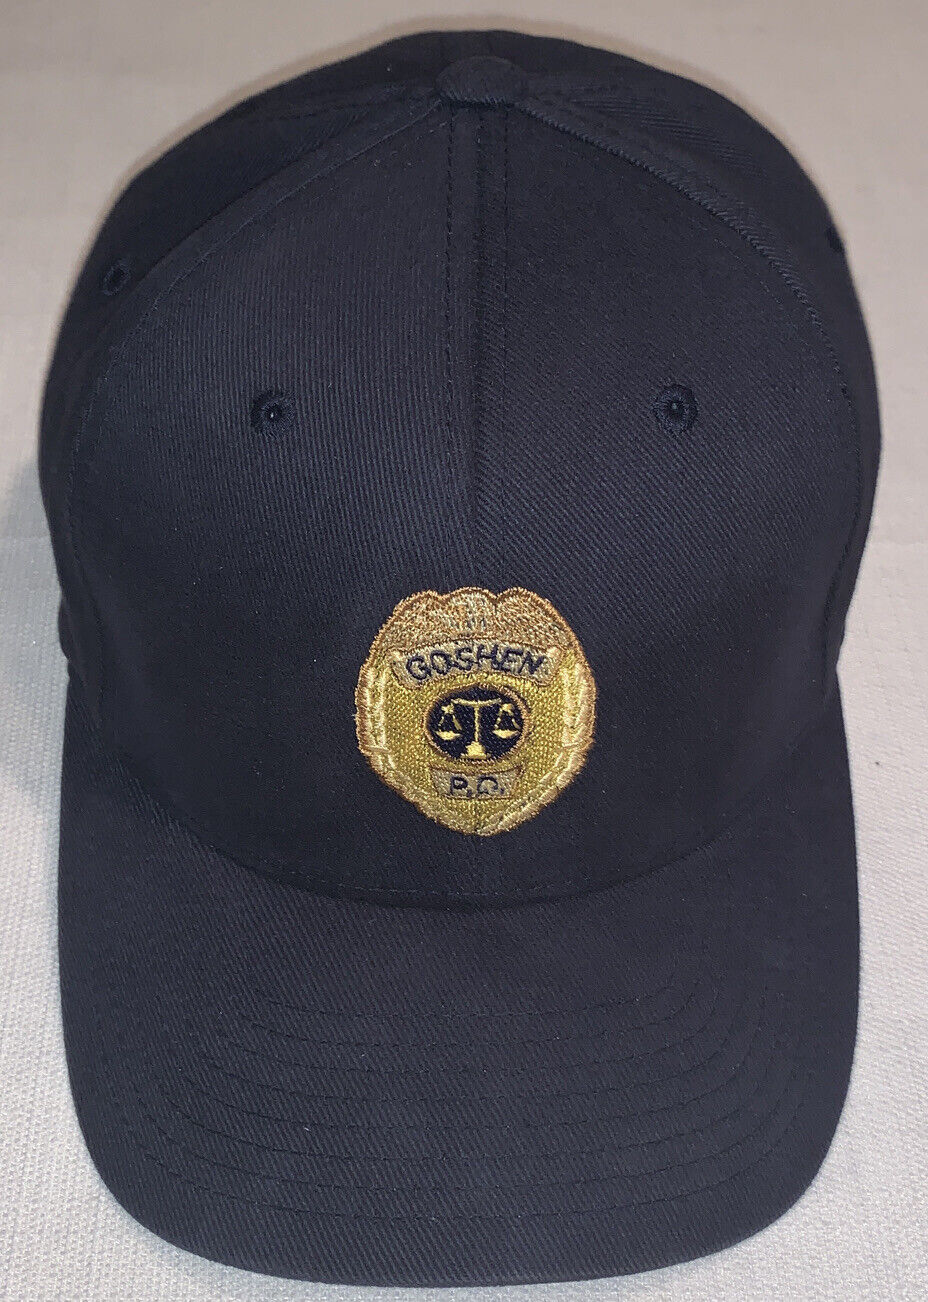 Goshen Orange County New York Police NY Flexfit Hat Cap New NYPD GPD